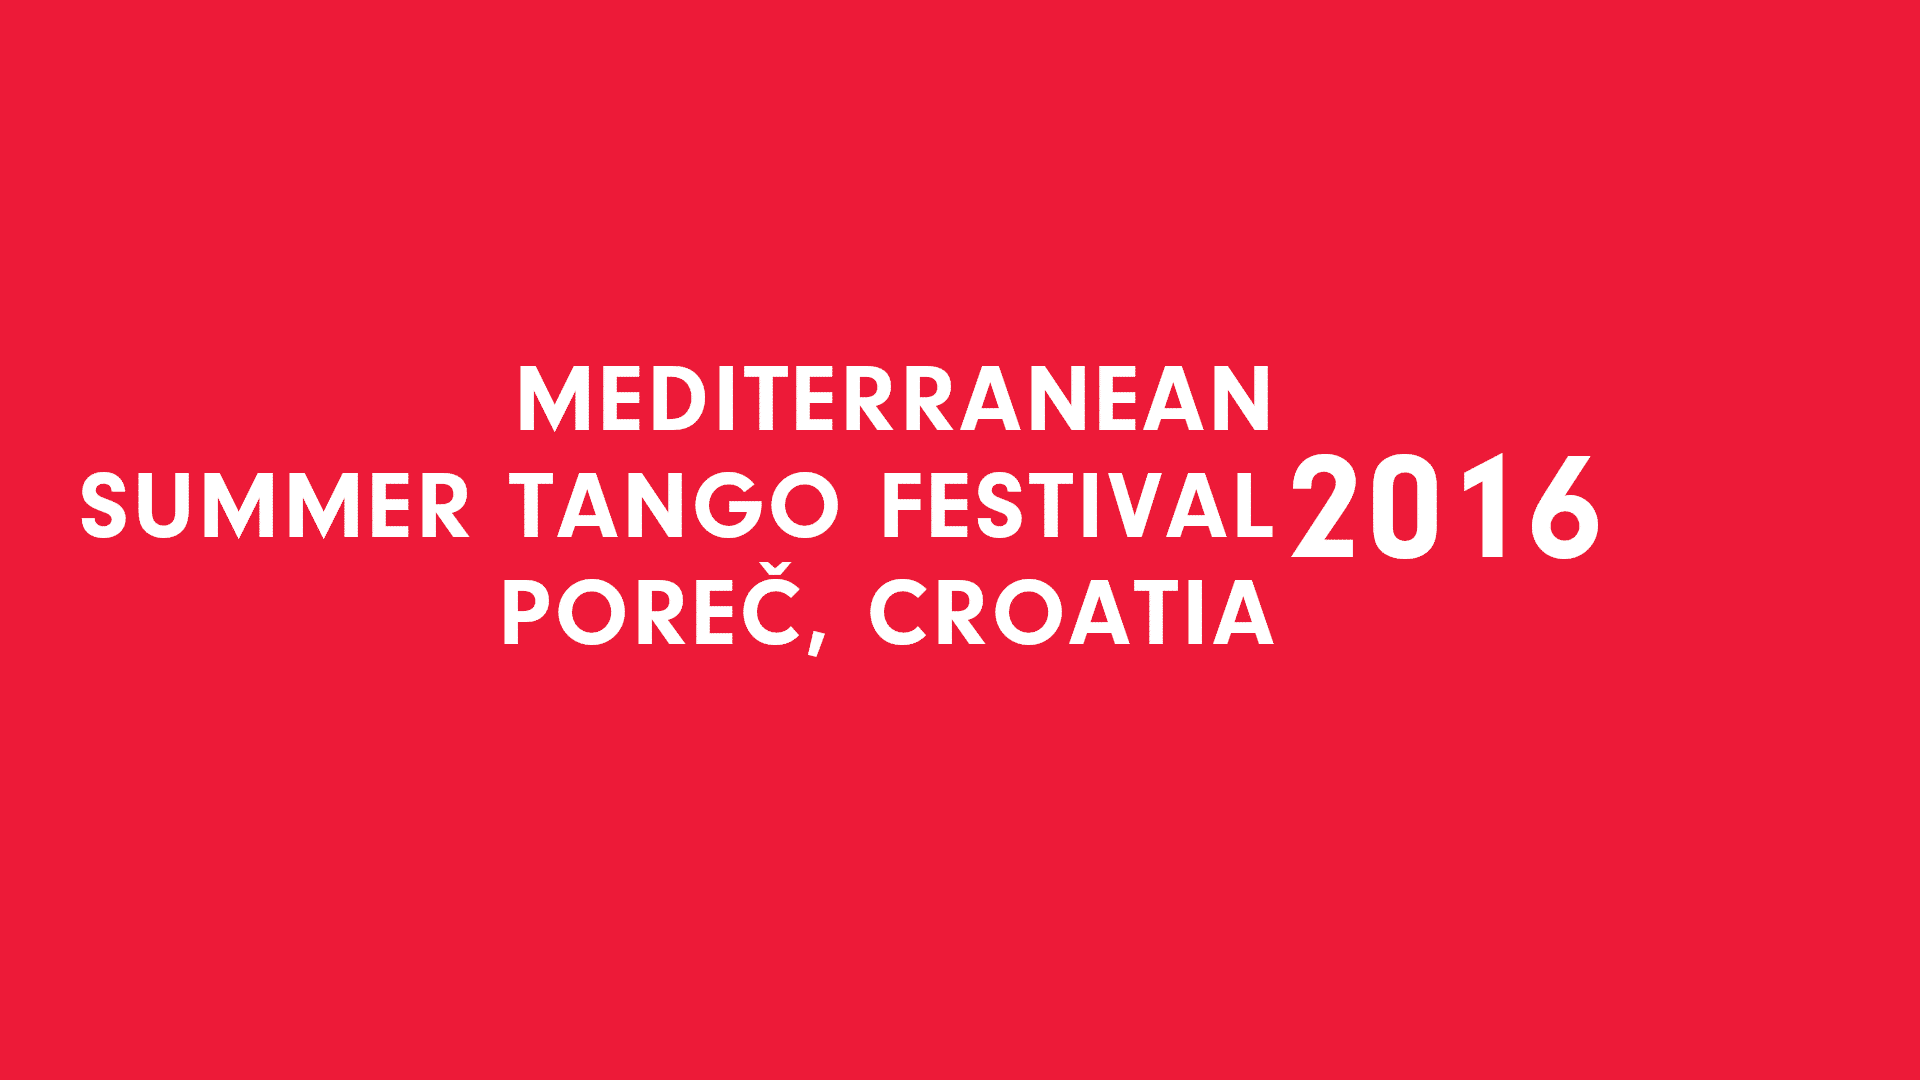 Mediterranean Summer Tango Festival 2016 Preview Image